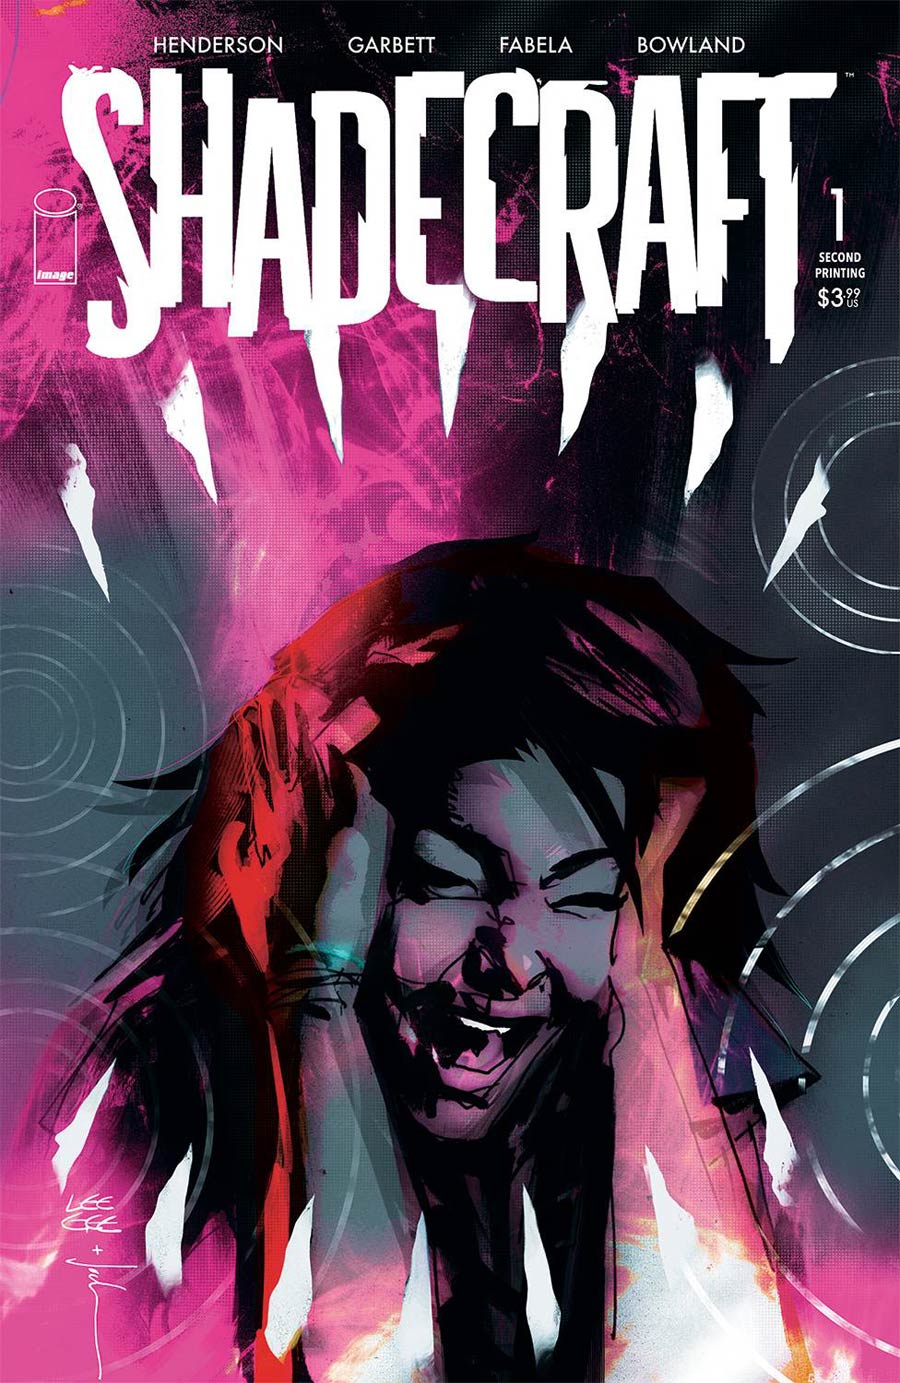 Shadecraft #1 - 2nd Print